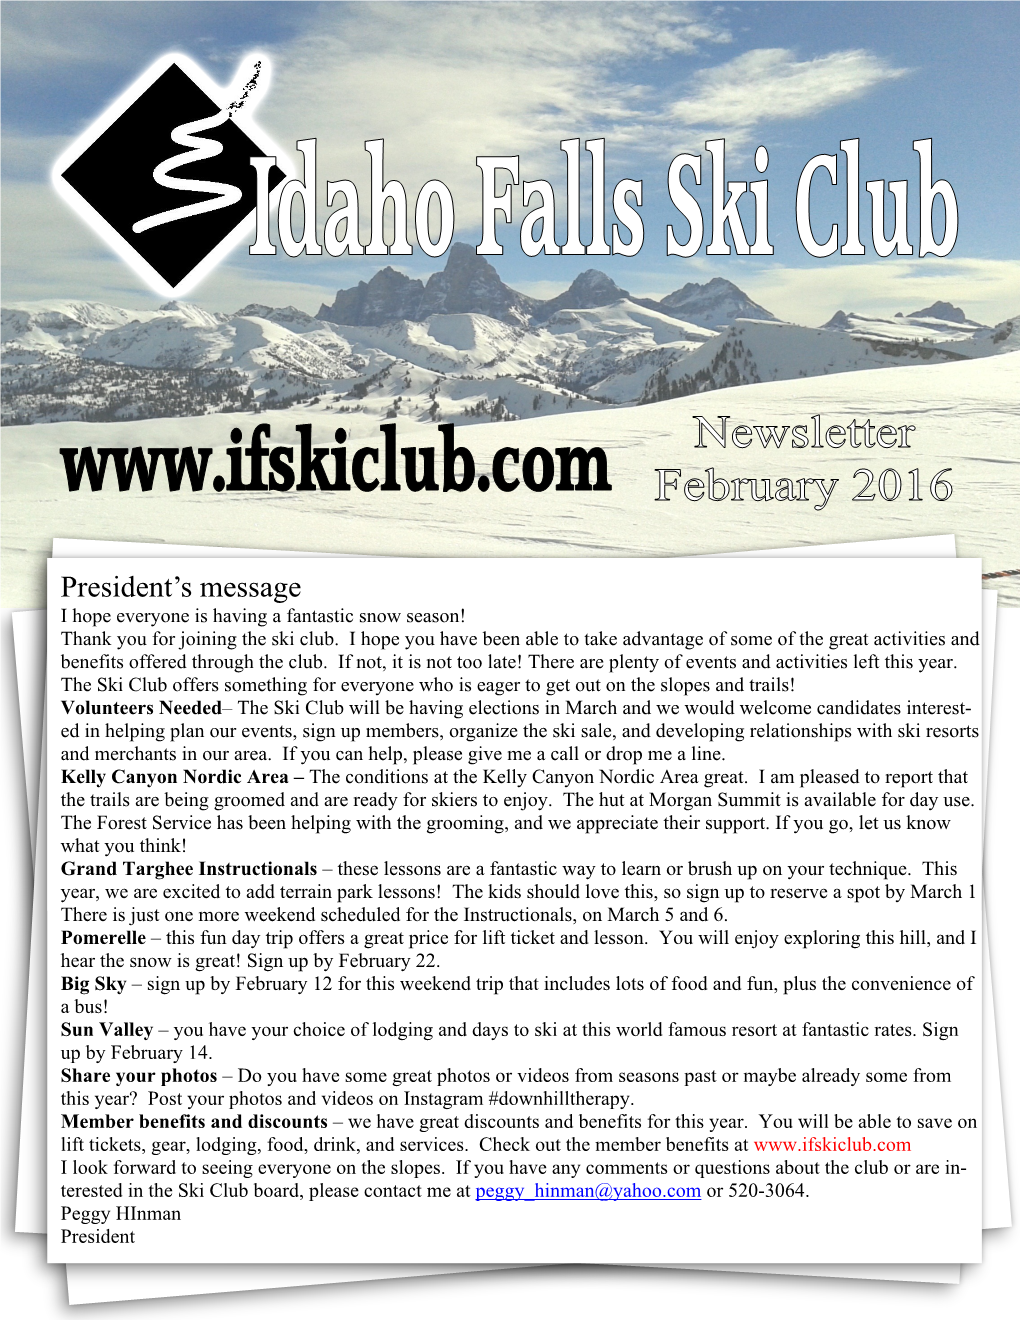 Ifsc Newsletter Feb 2016